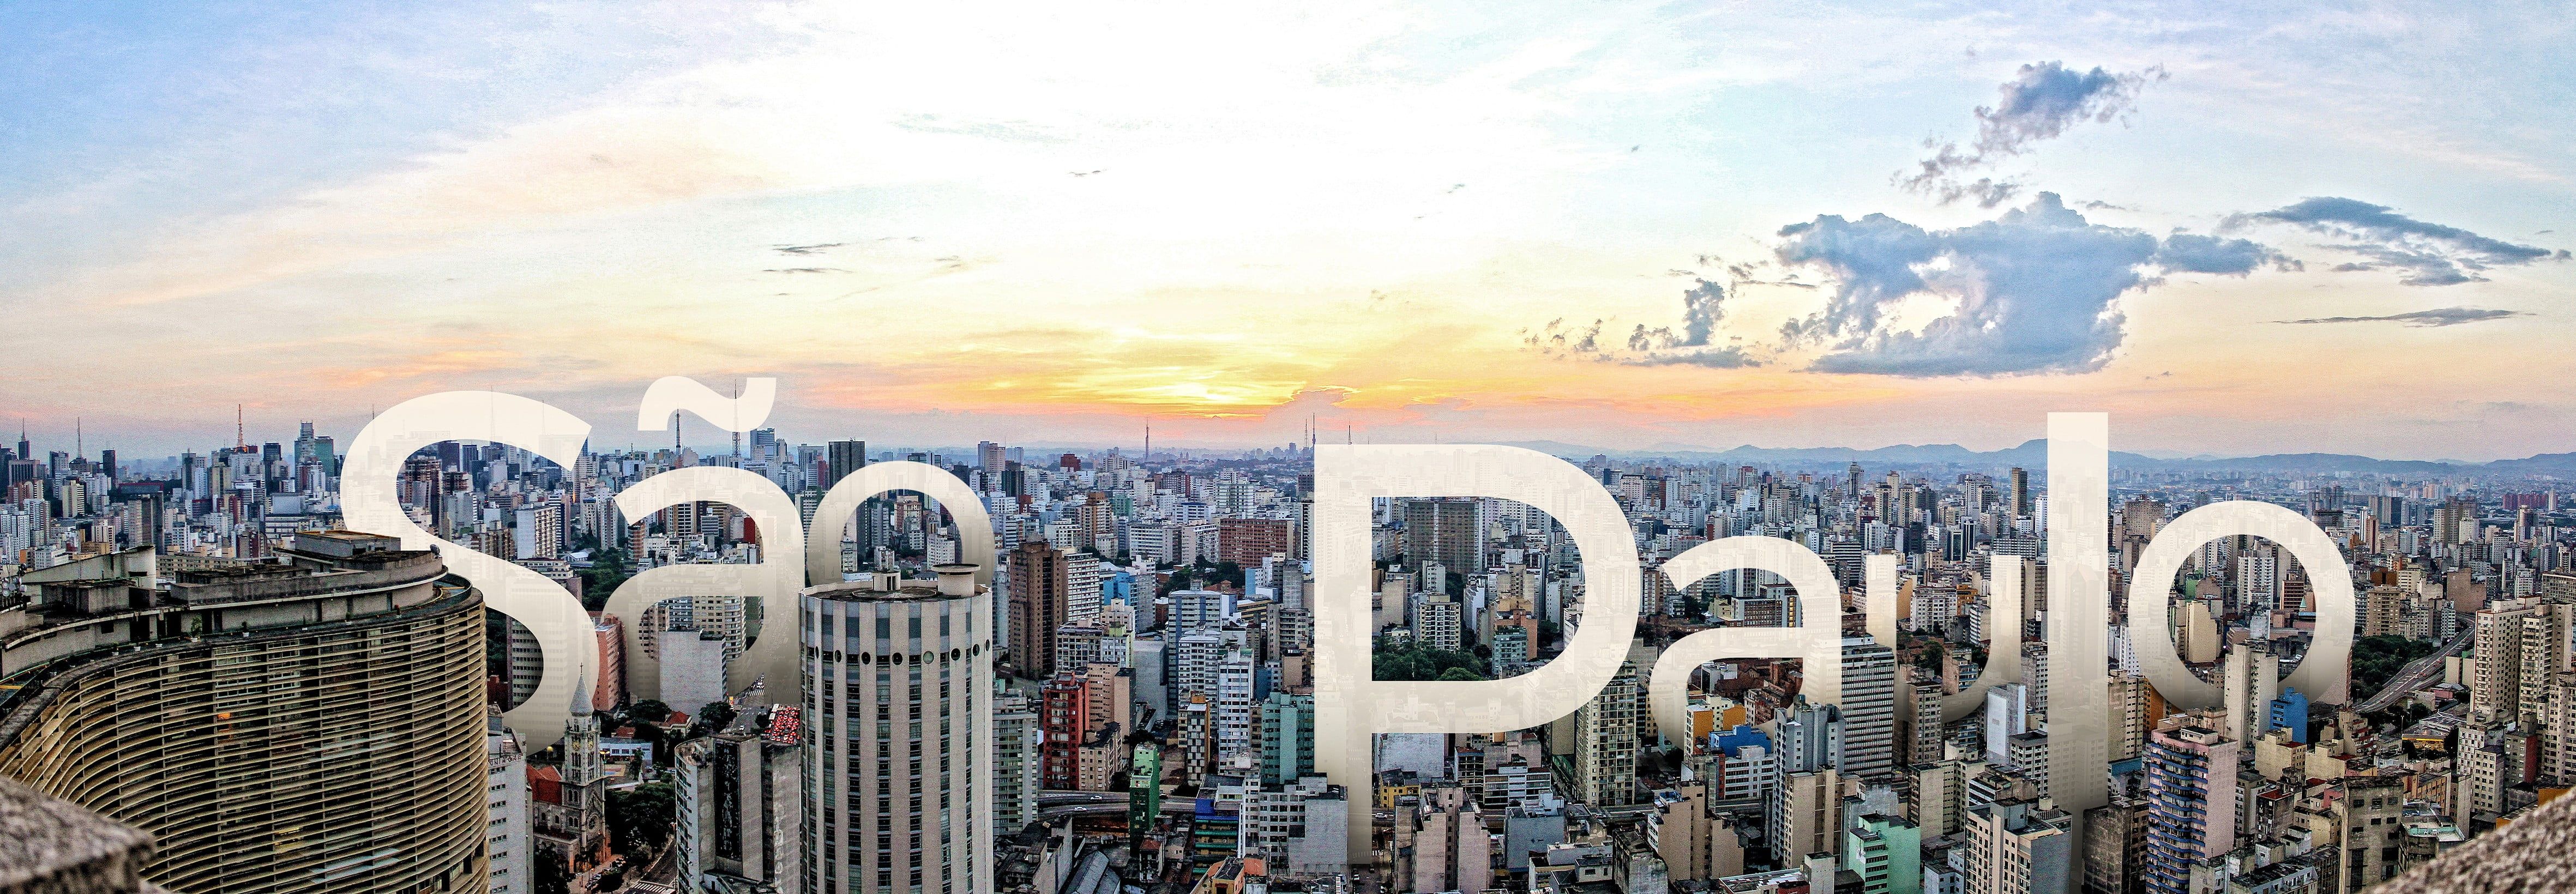 city buildings São Paulo #cityscape #albinos #building #Brazil #typography digital art K #wallpaper #hdwallpaper #deskt. City wallpaper, Skyline, City buildings